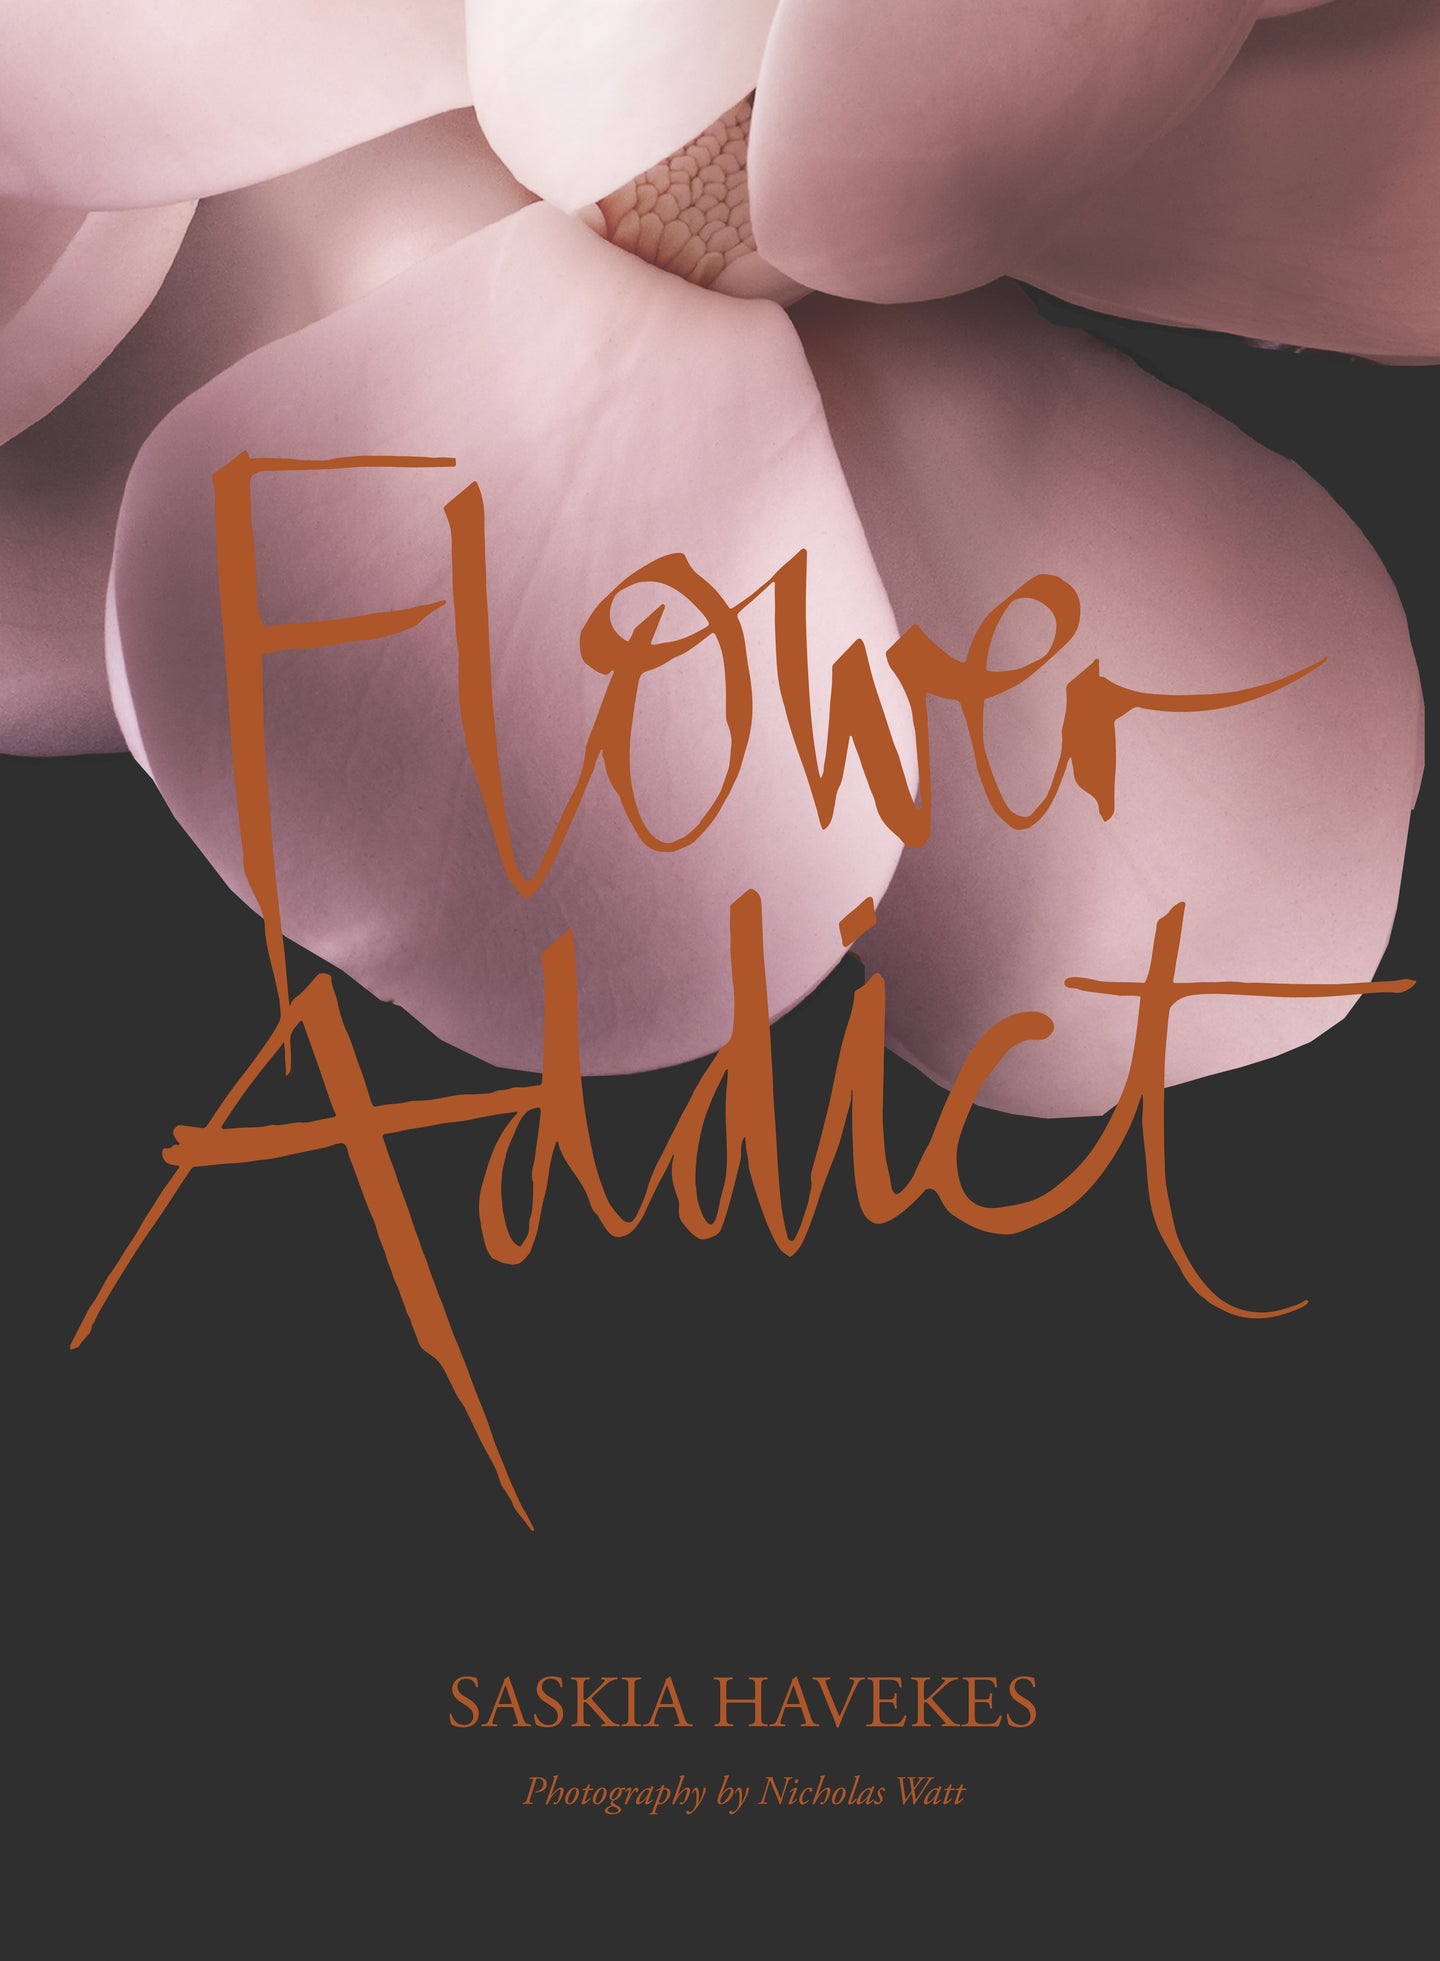 FLOWER ADDICT - SASKIA HAVEKES